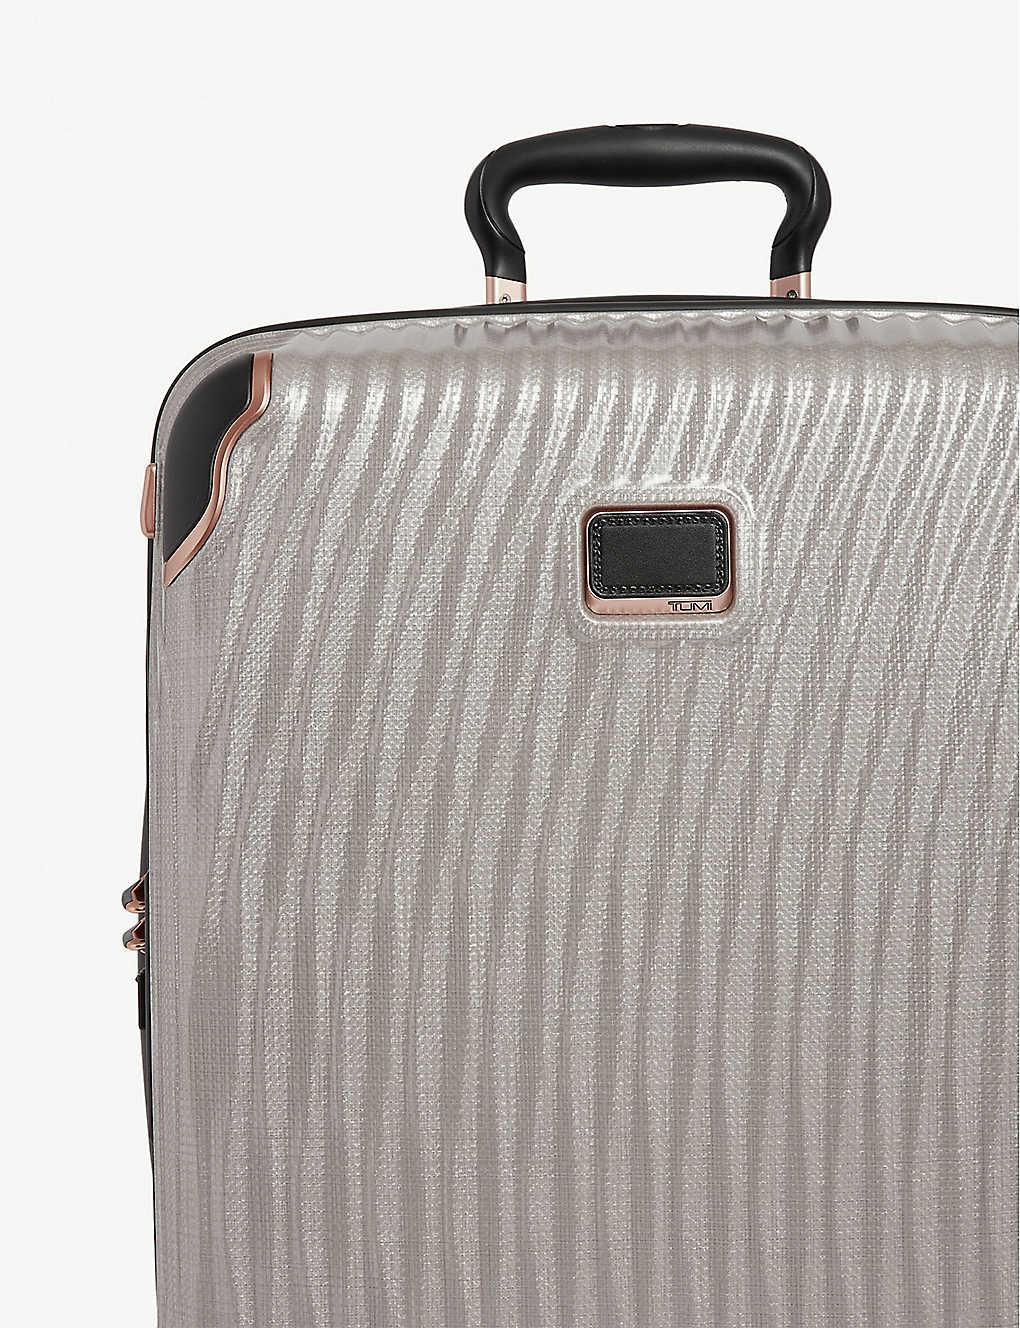 Tumi Latitude International Slim Carry-on Suitcase 55cm | Lyst